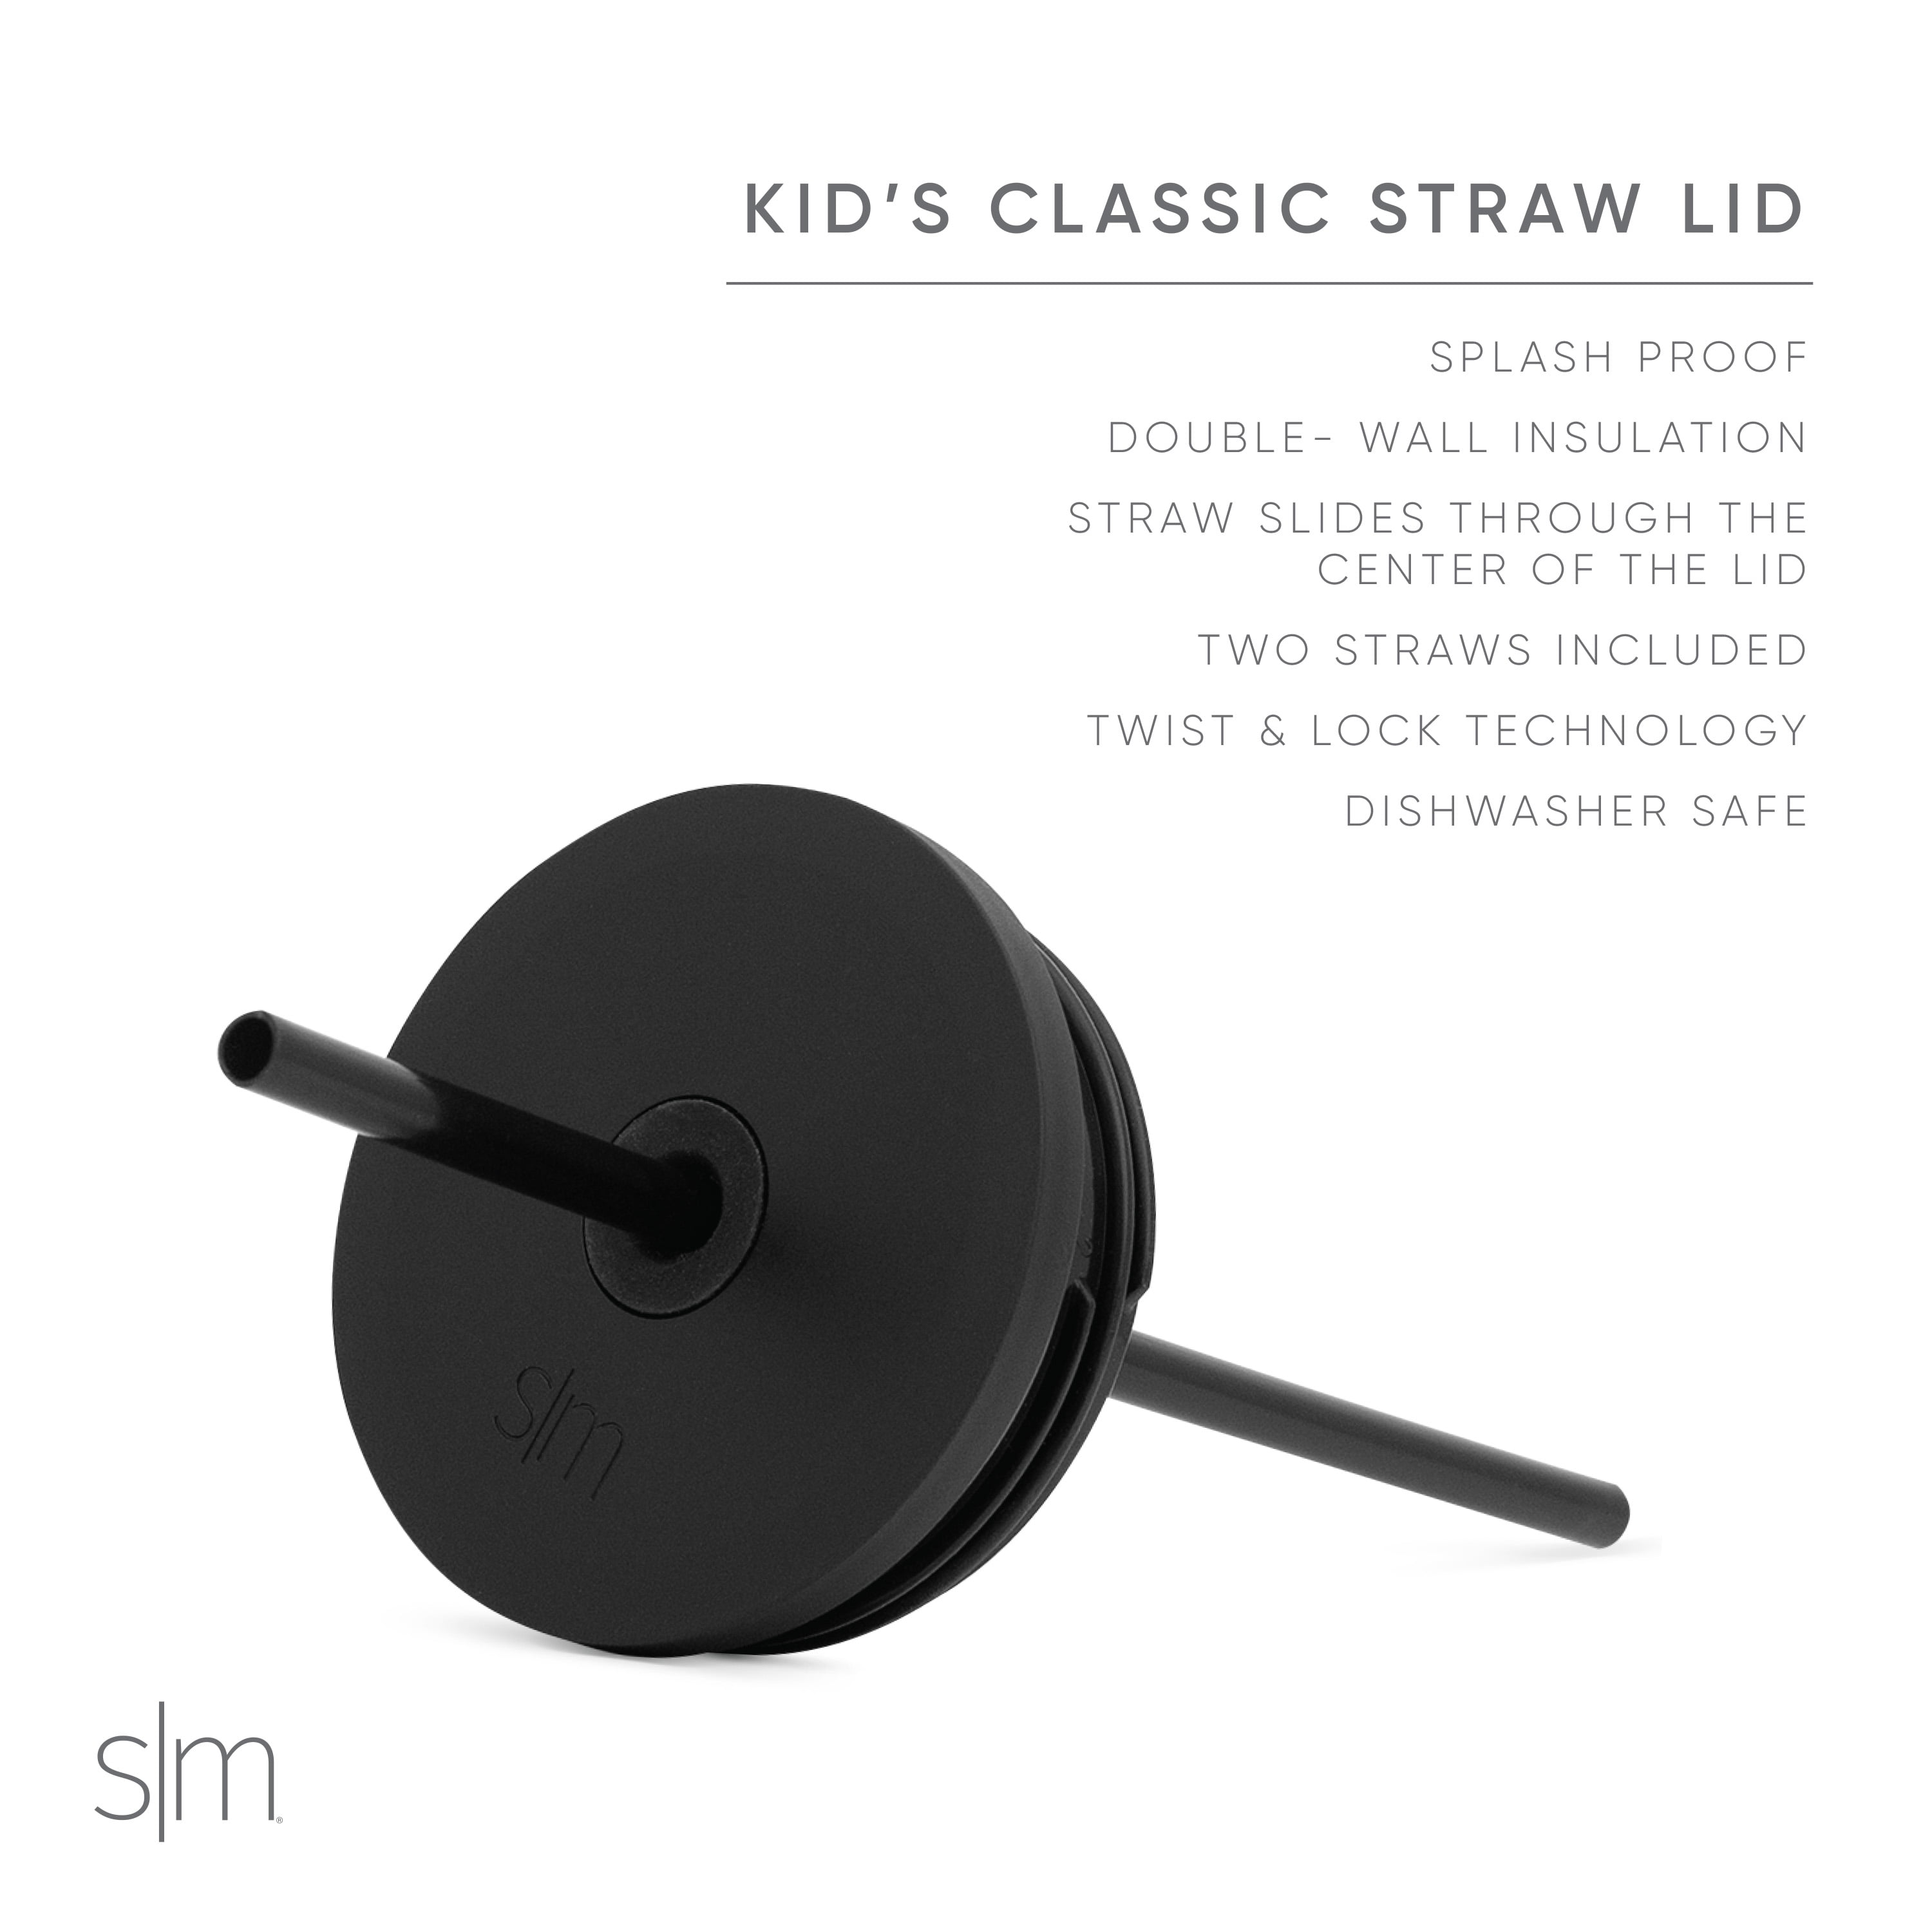 Plastic Reusable Drinking Straws 12-Pack – Simple Modern